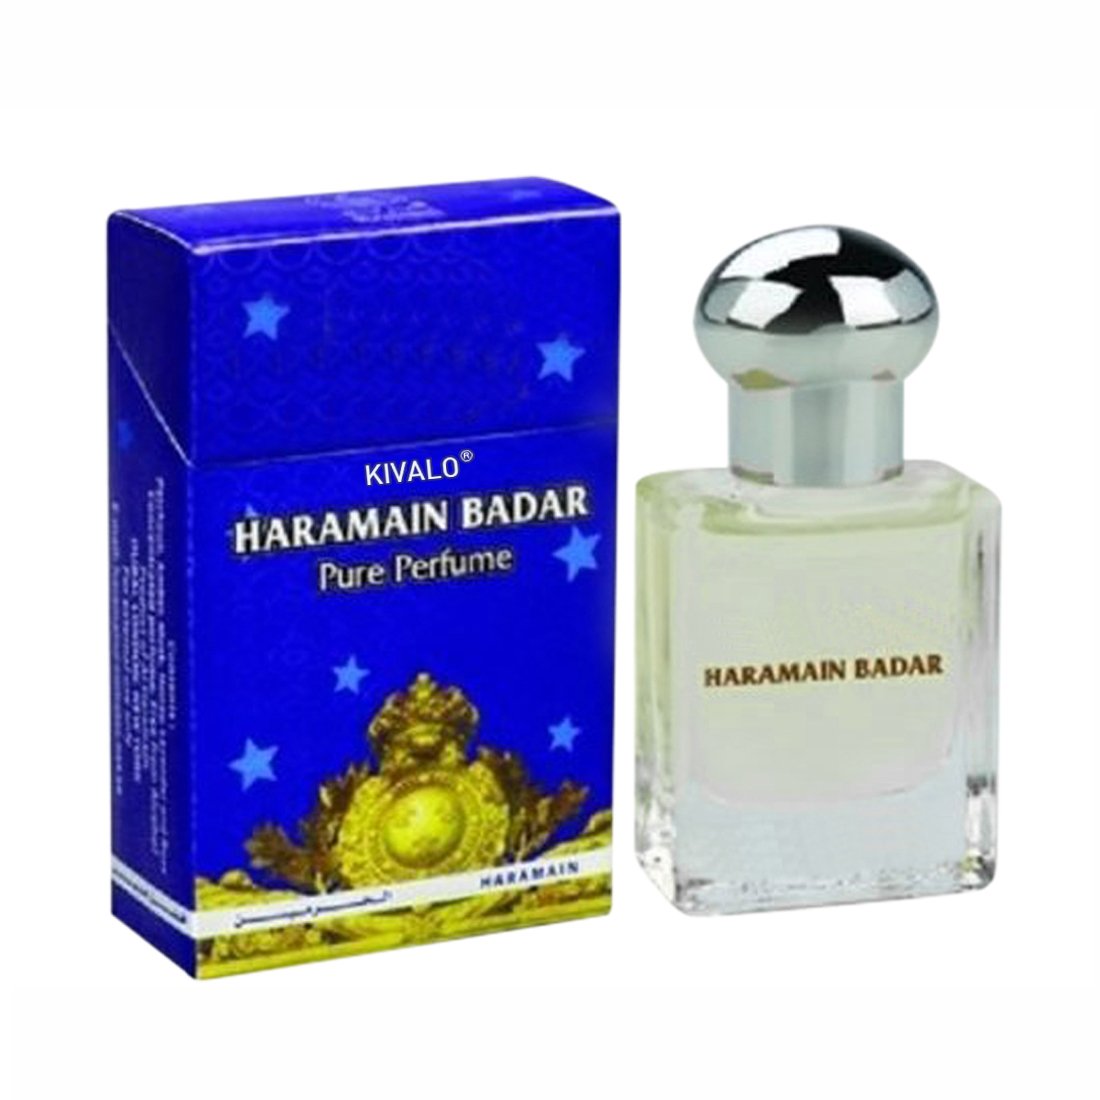 Al Haramain Madinah & Badar Fragrance Pure Original Roll on Perfume Oil Pack of 2 (Attar) - 2 x 15 ml